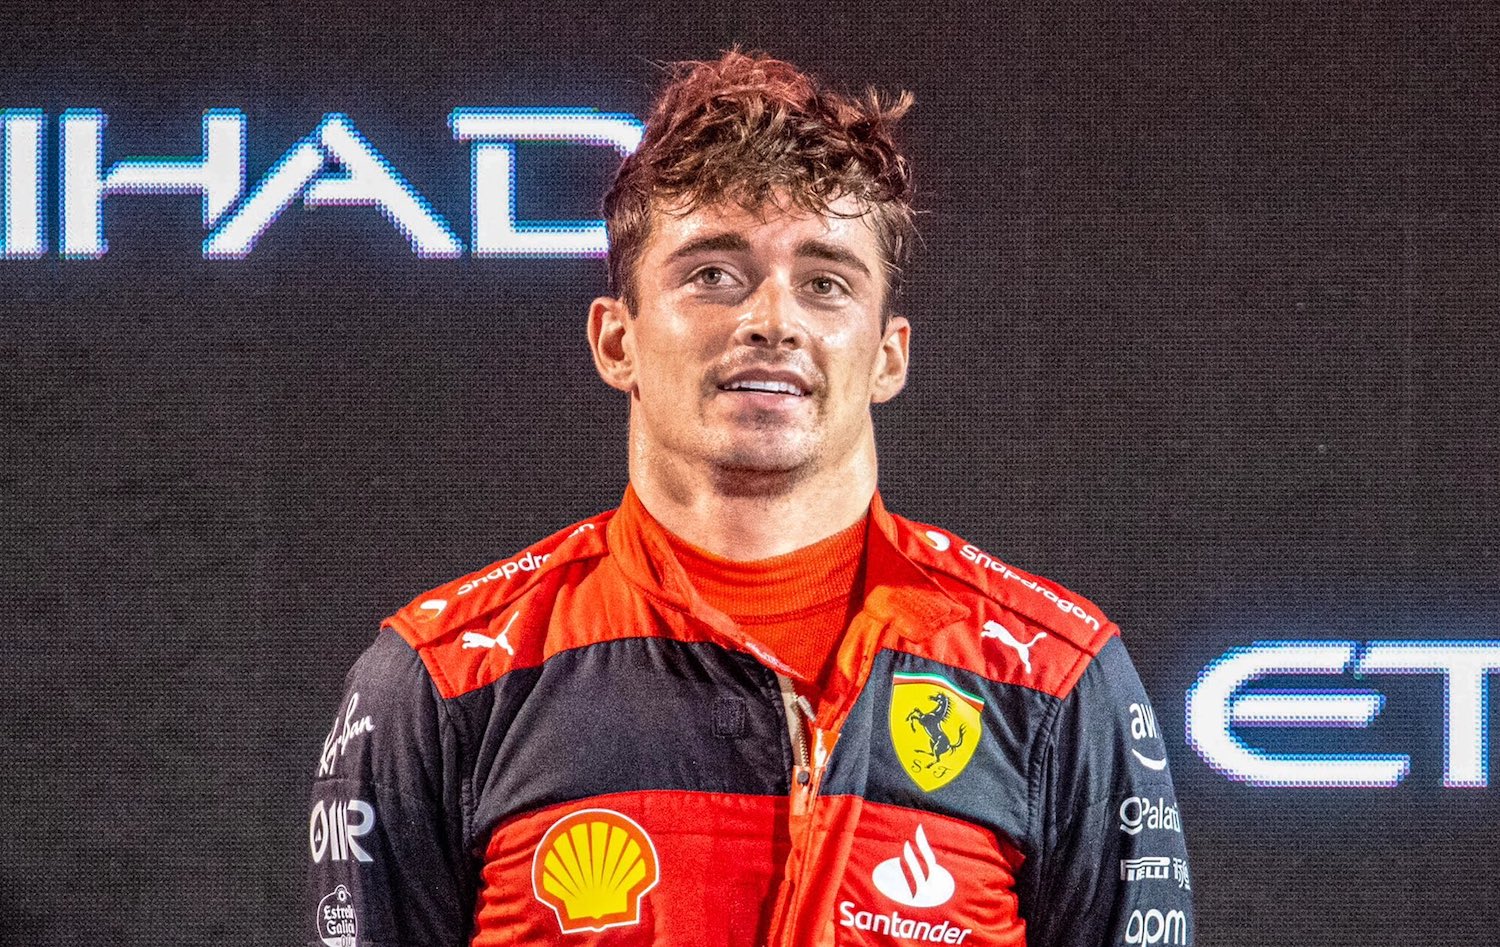 Abu Dhabi Grand Prix: Charles Leclerc Deputy World Champion